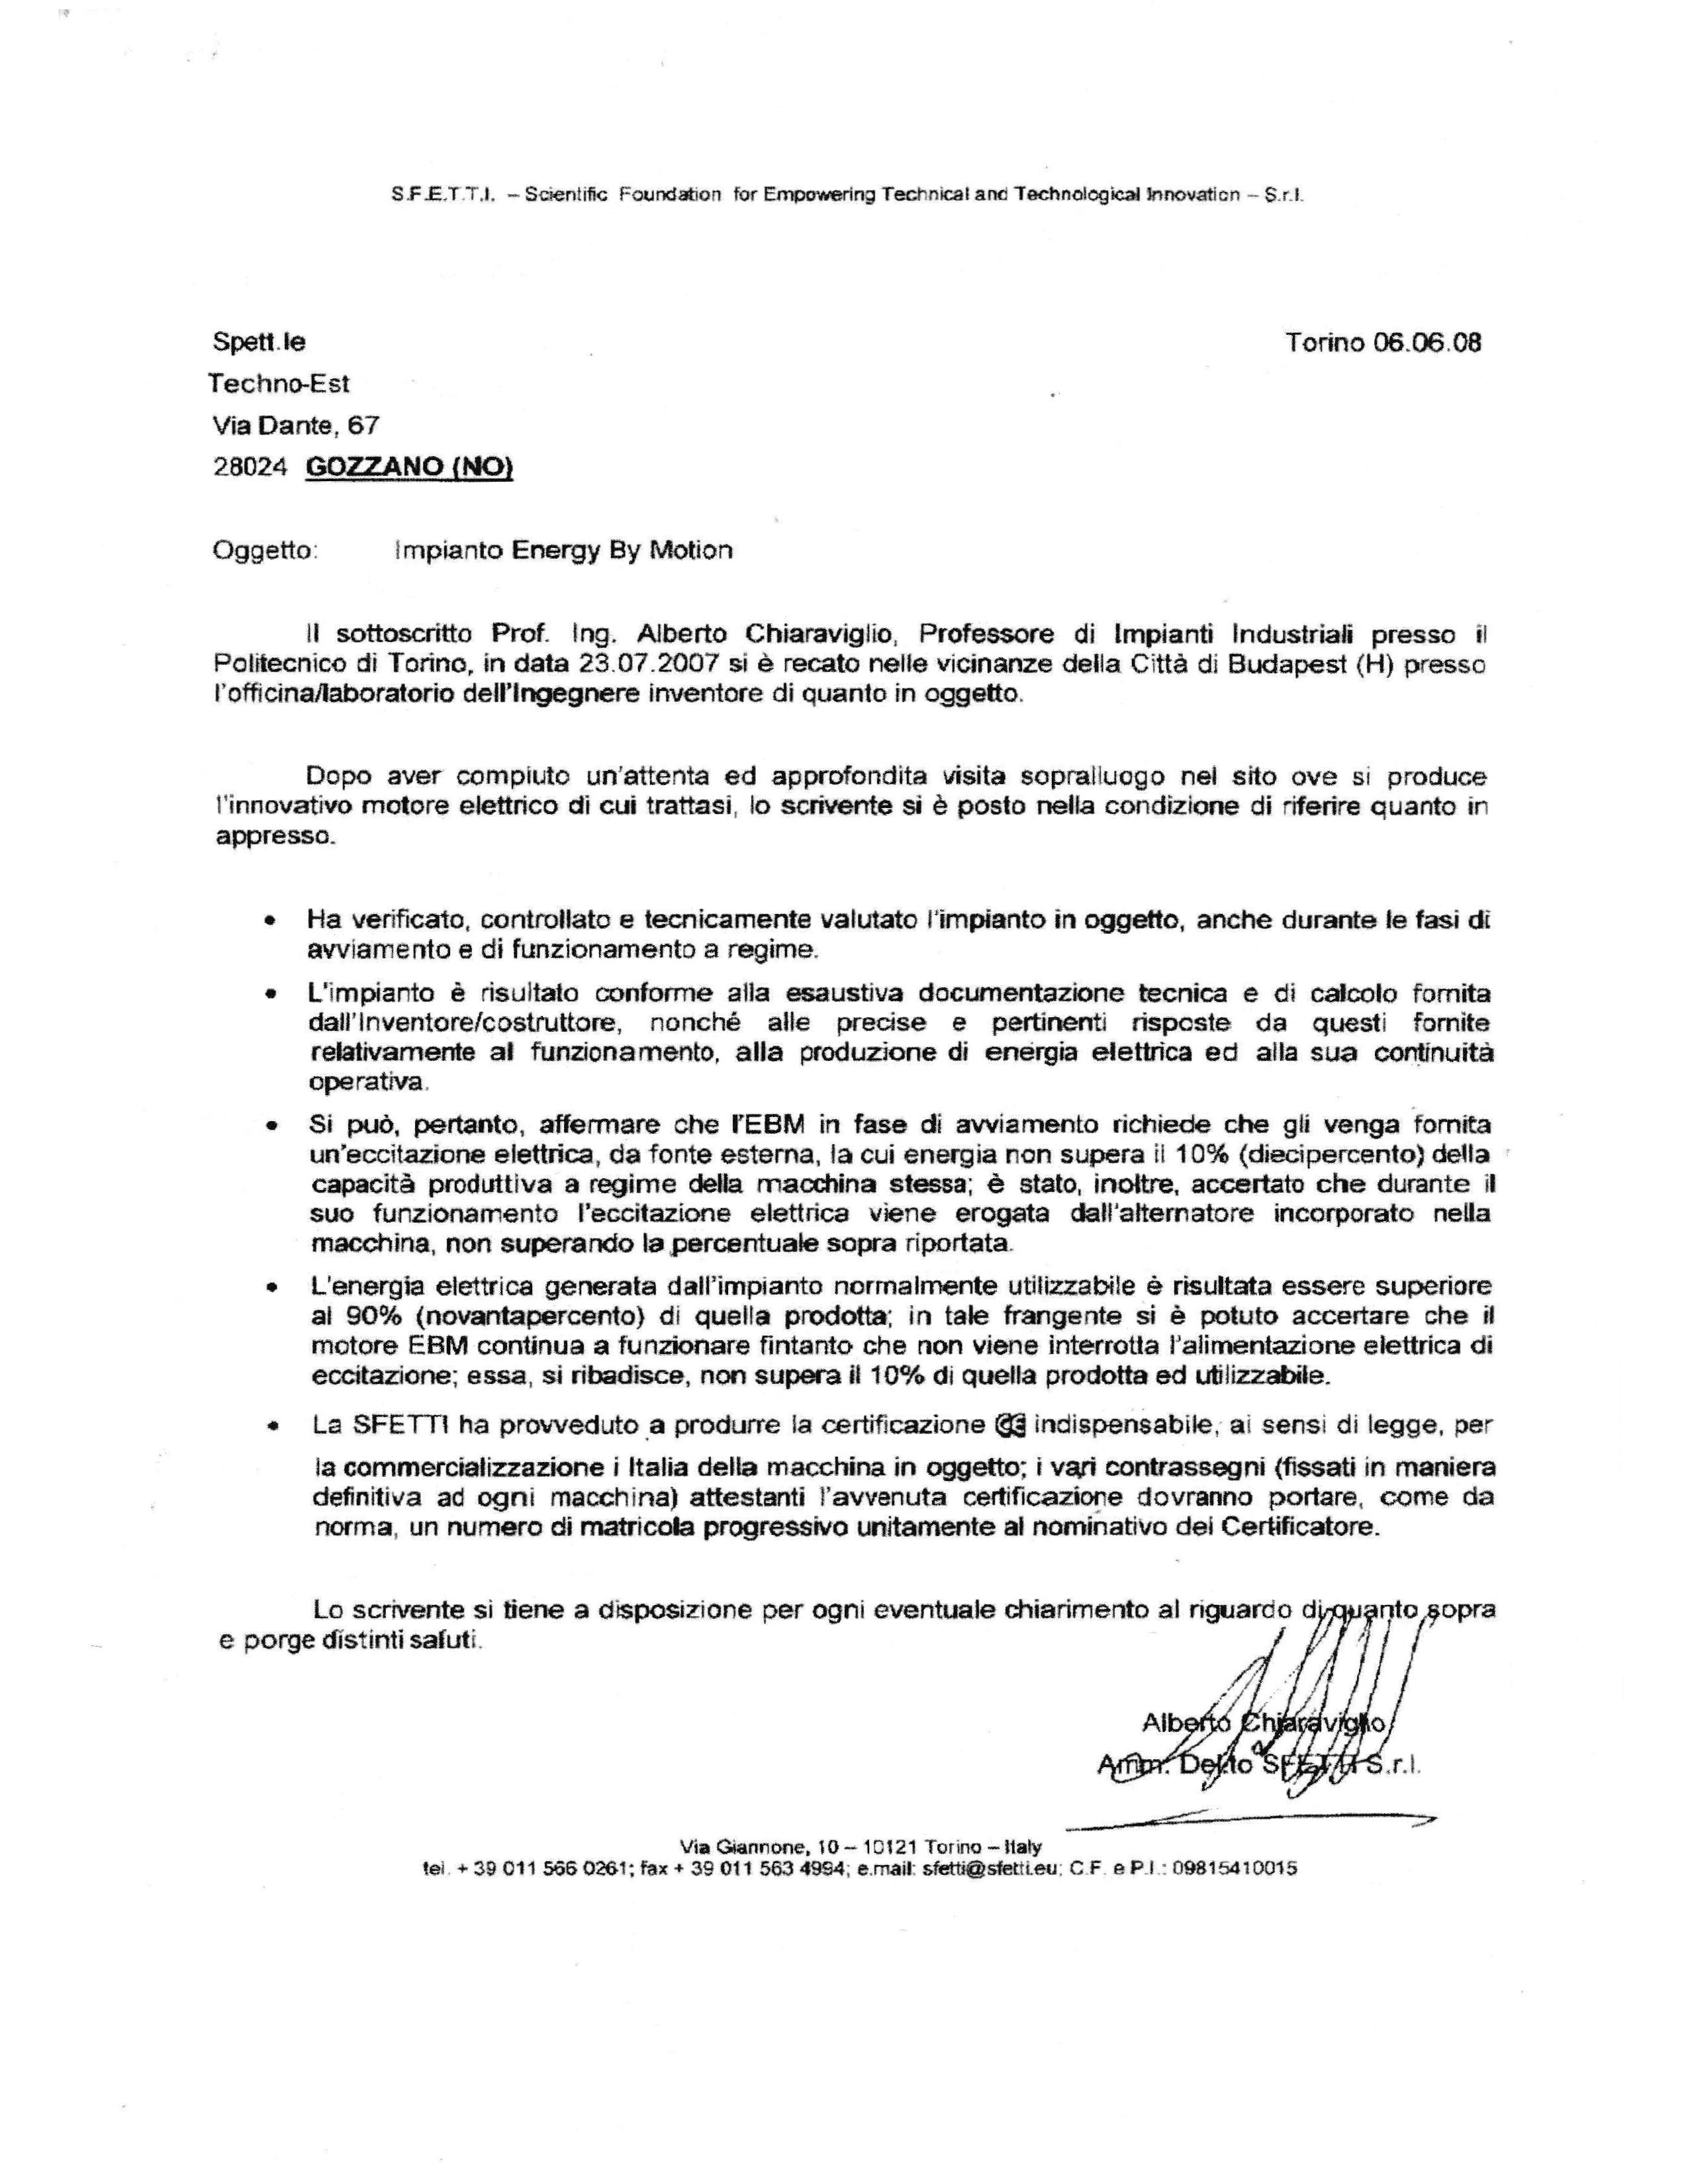 Statutory declaration Italy 1